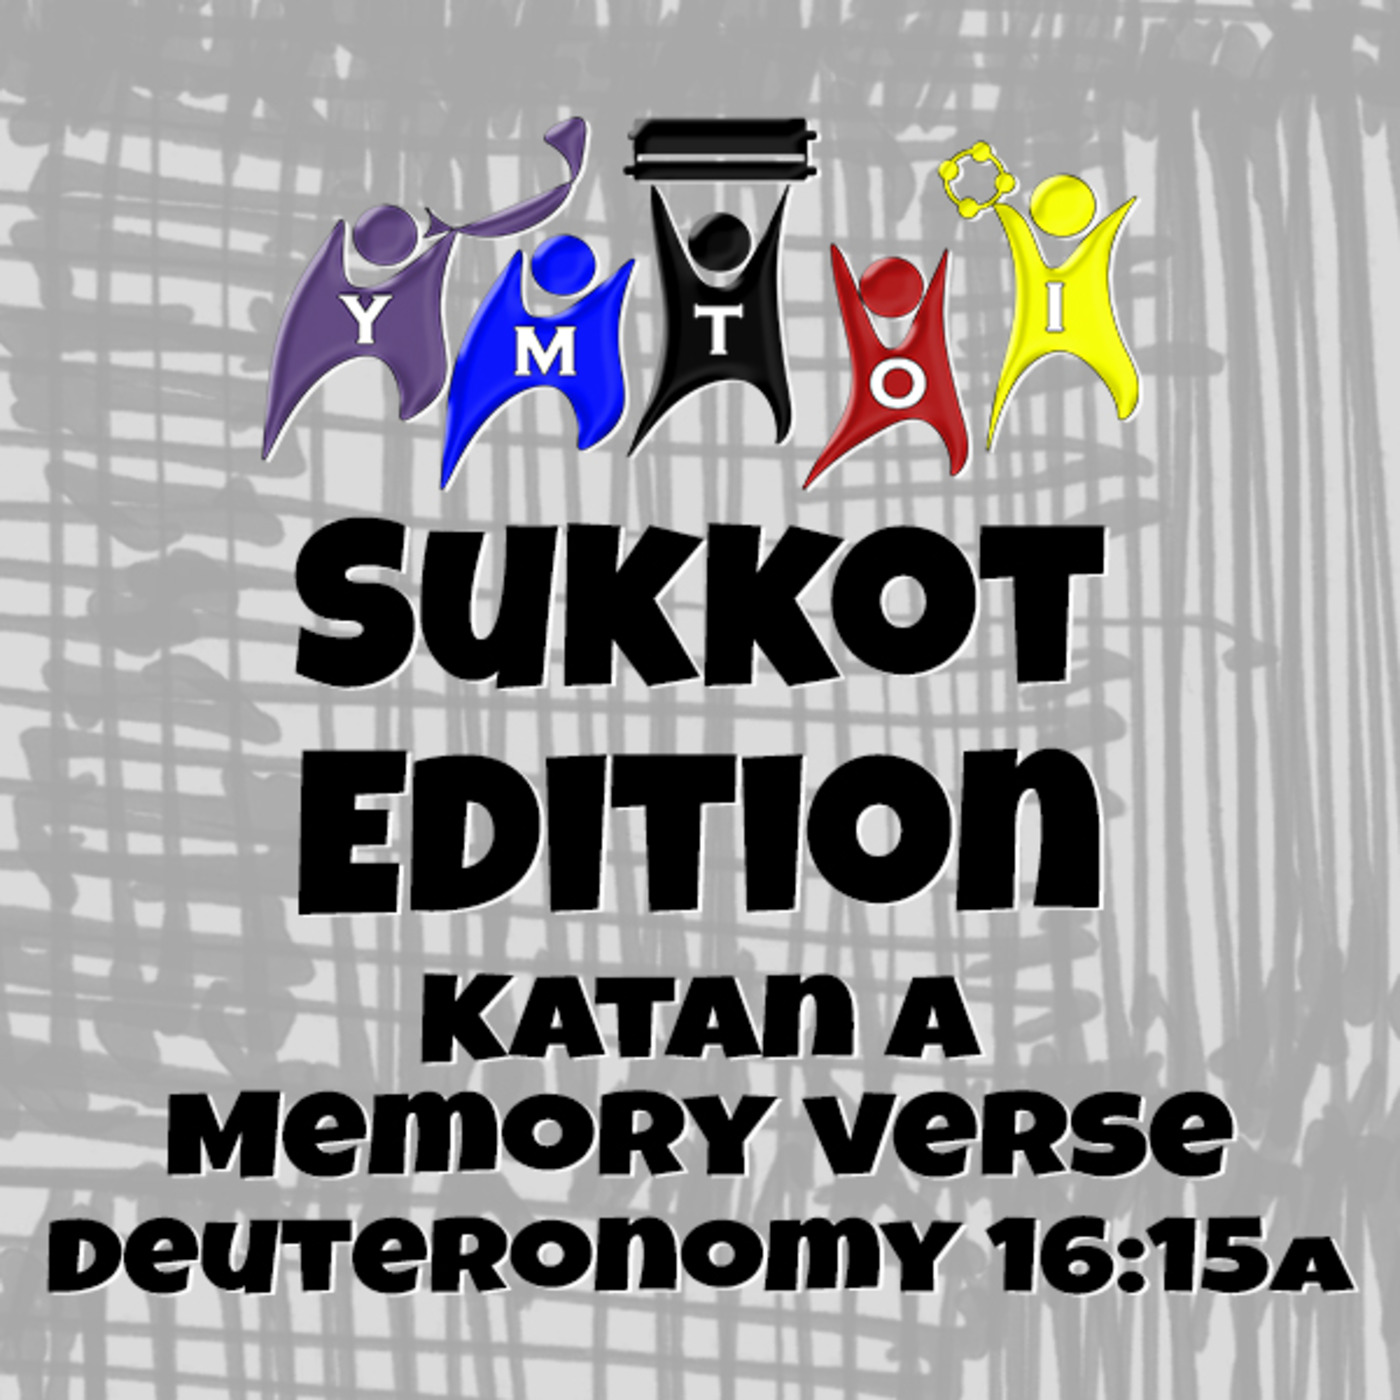 Episode 669: YMTOI Parsha Pearls Sukkot Edition | Memory Verse for Katan A | Deuteronomy 16:15a